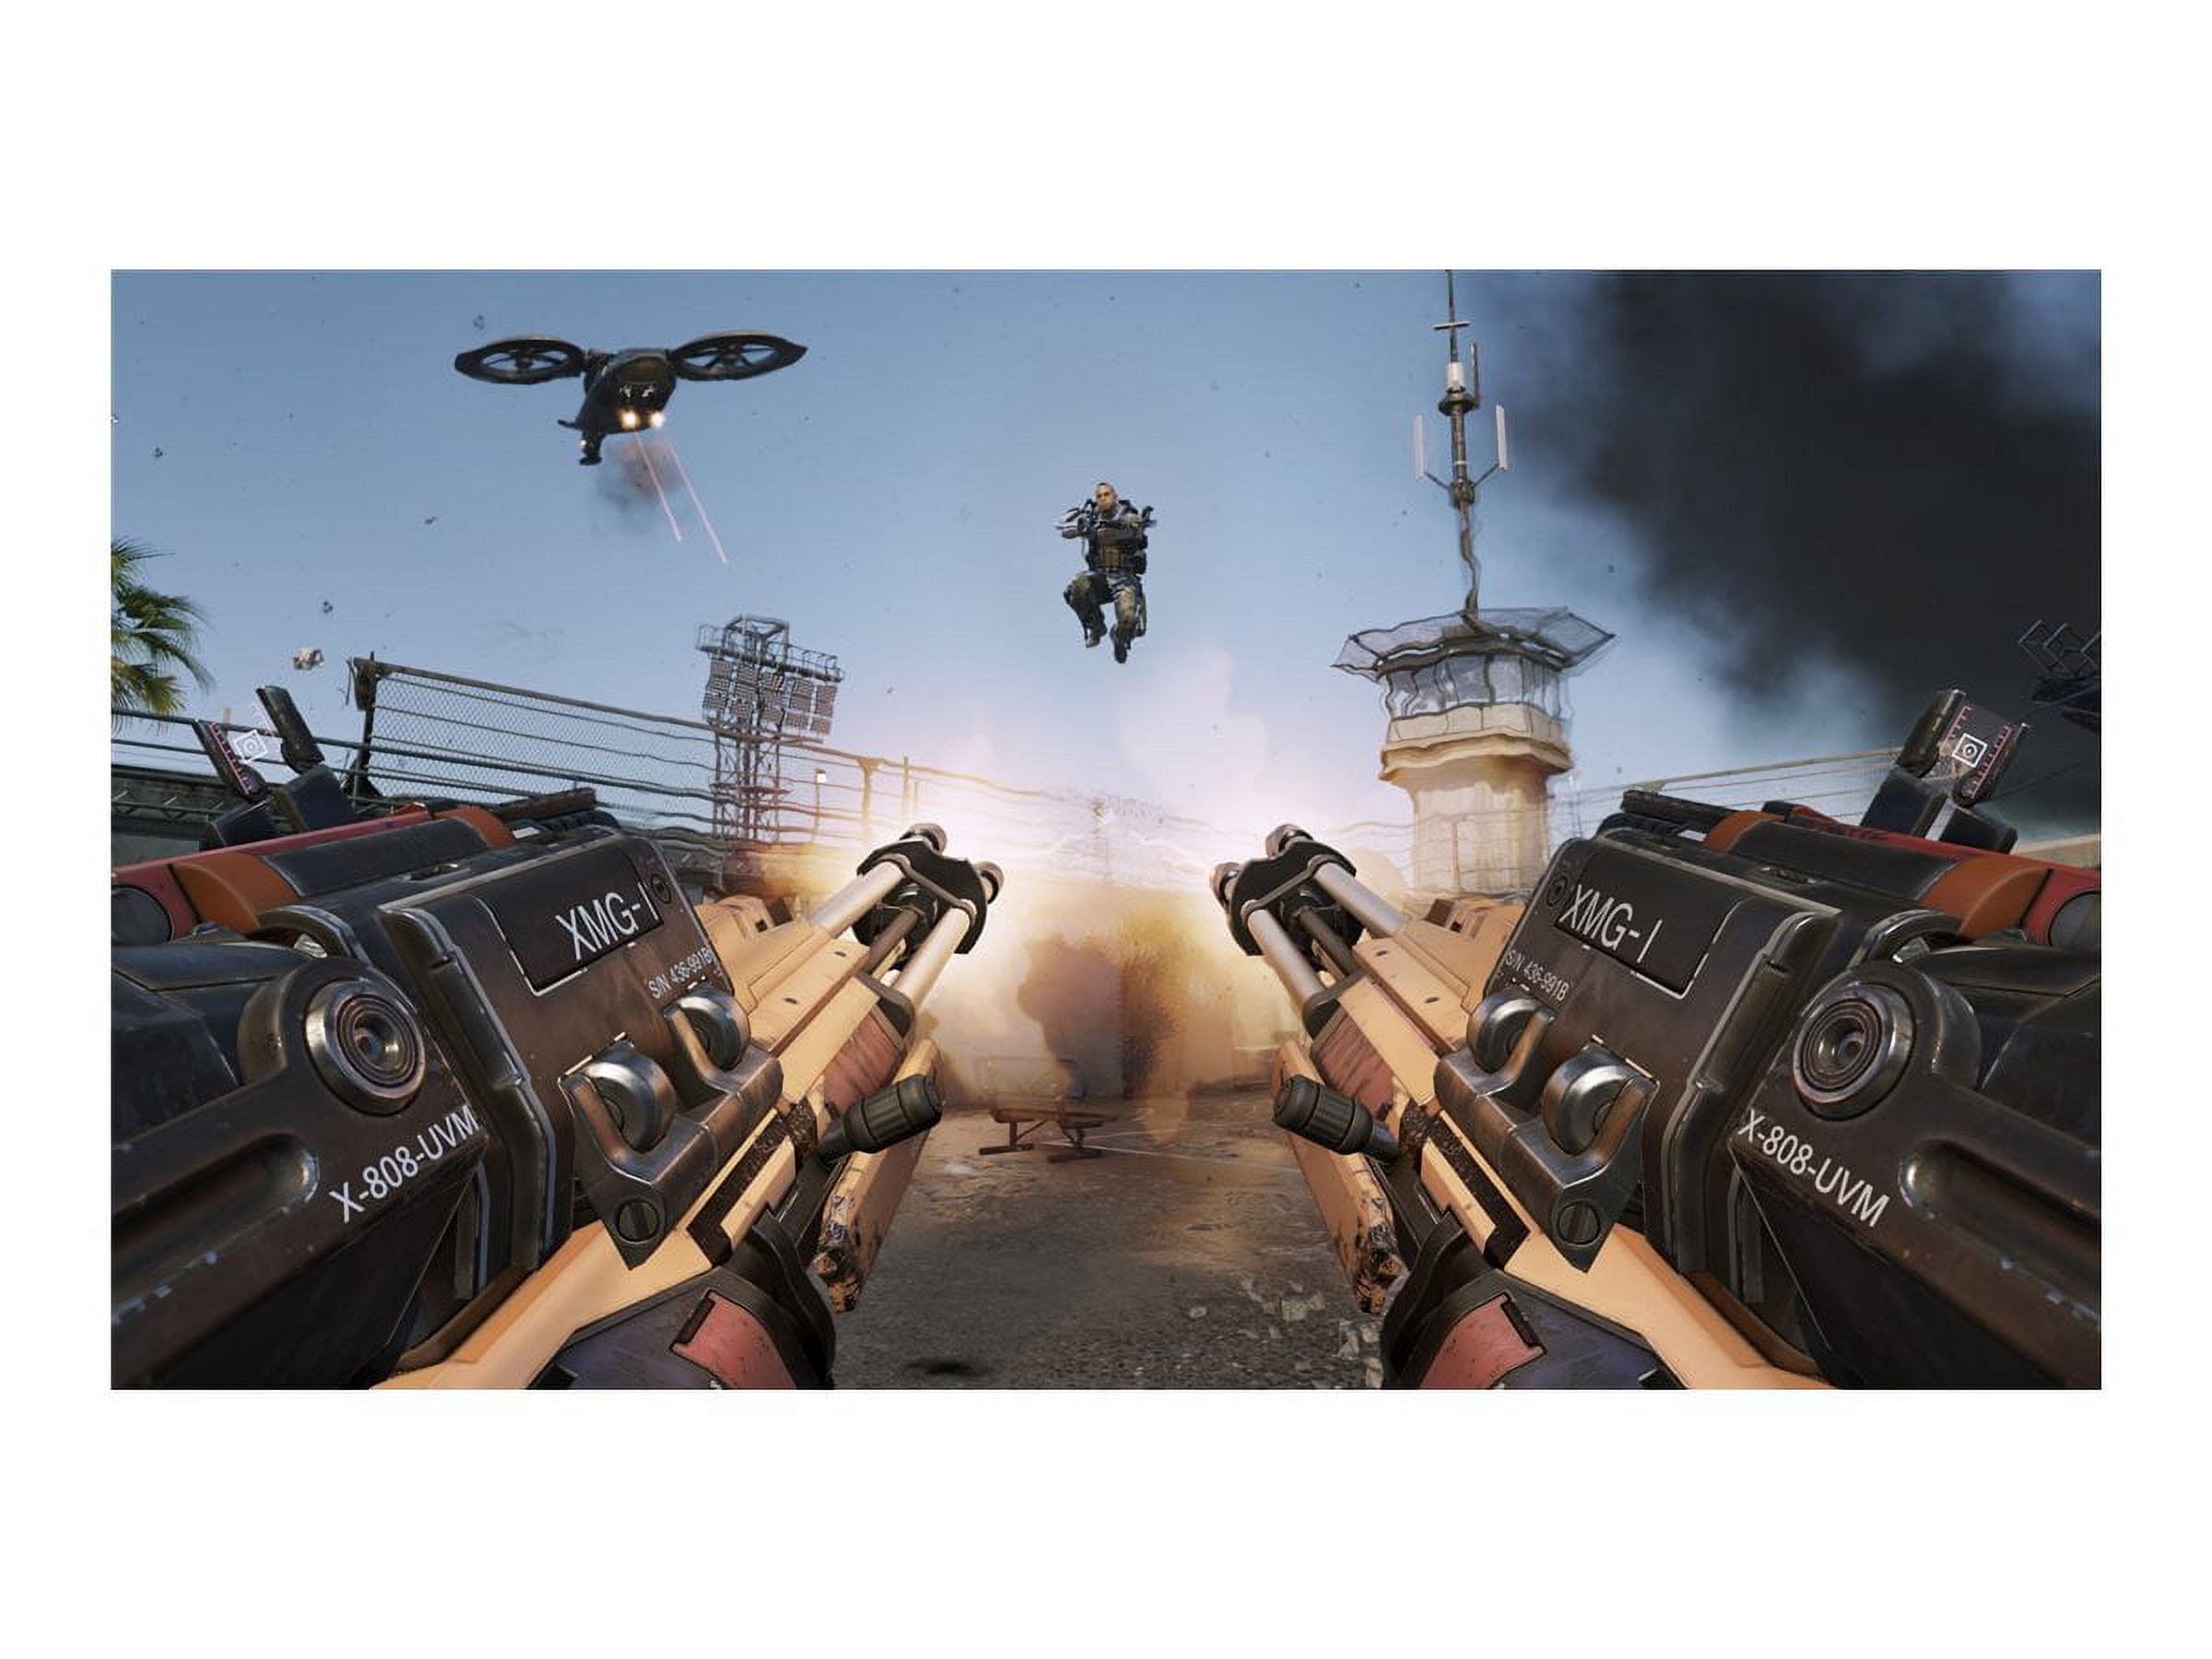 Call of Duty: Advanced Warfare - Gold Edition